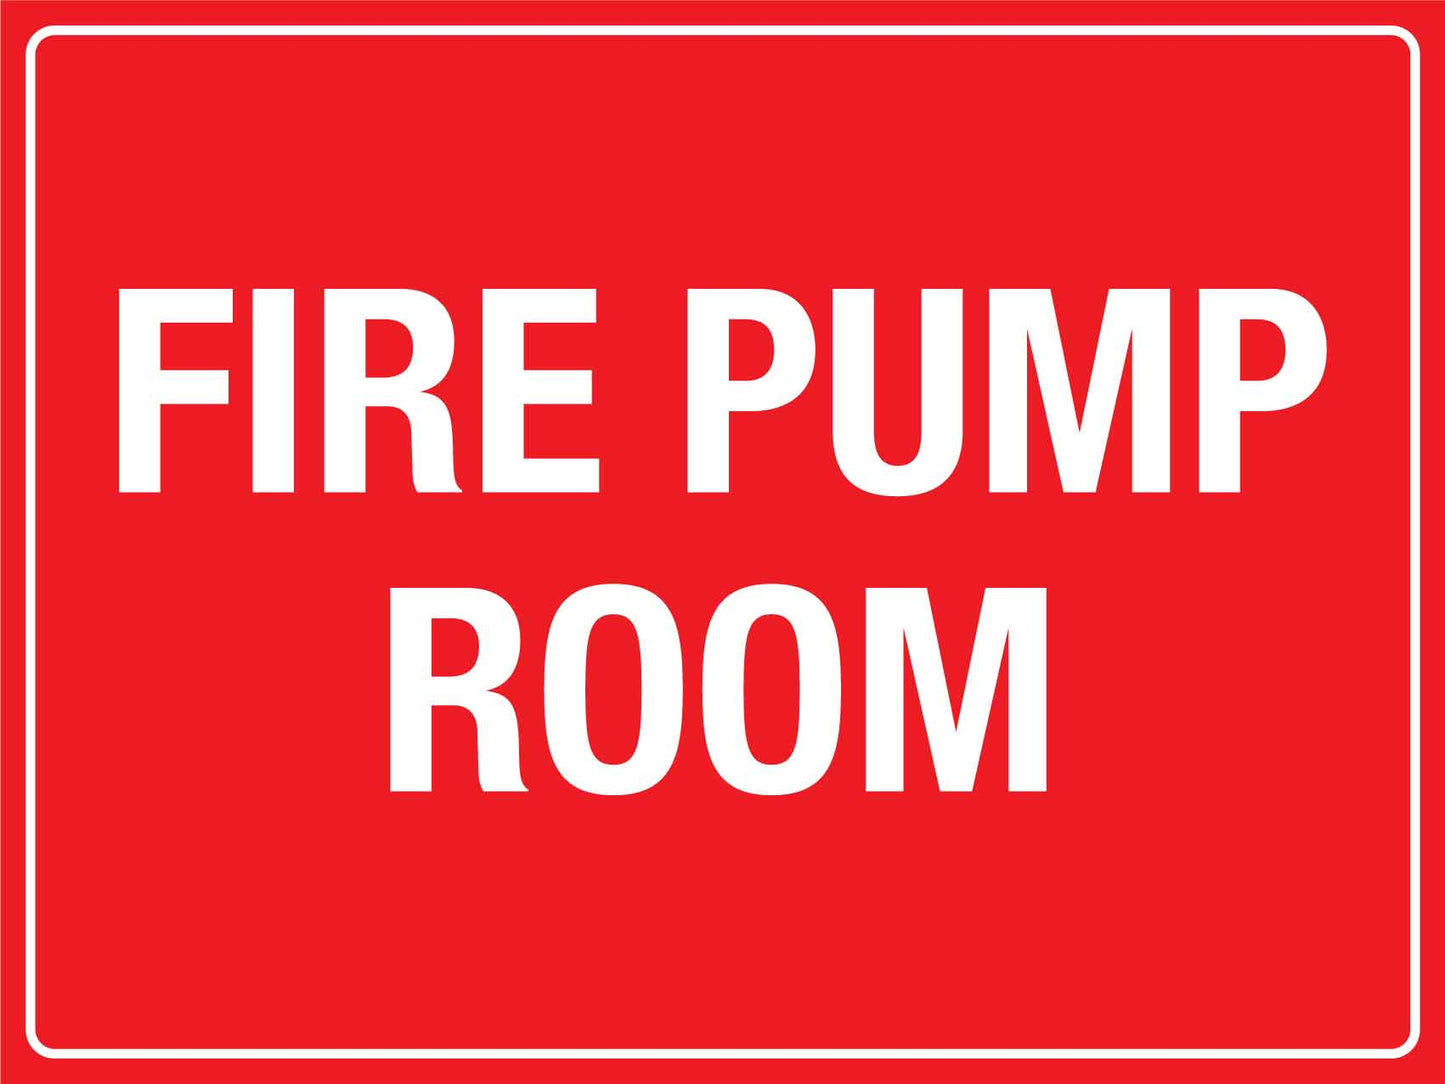 Fire Pump Room Sign